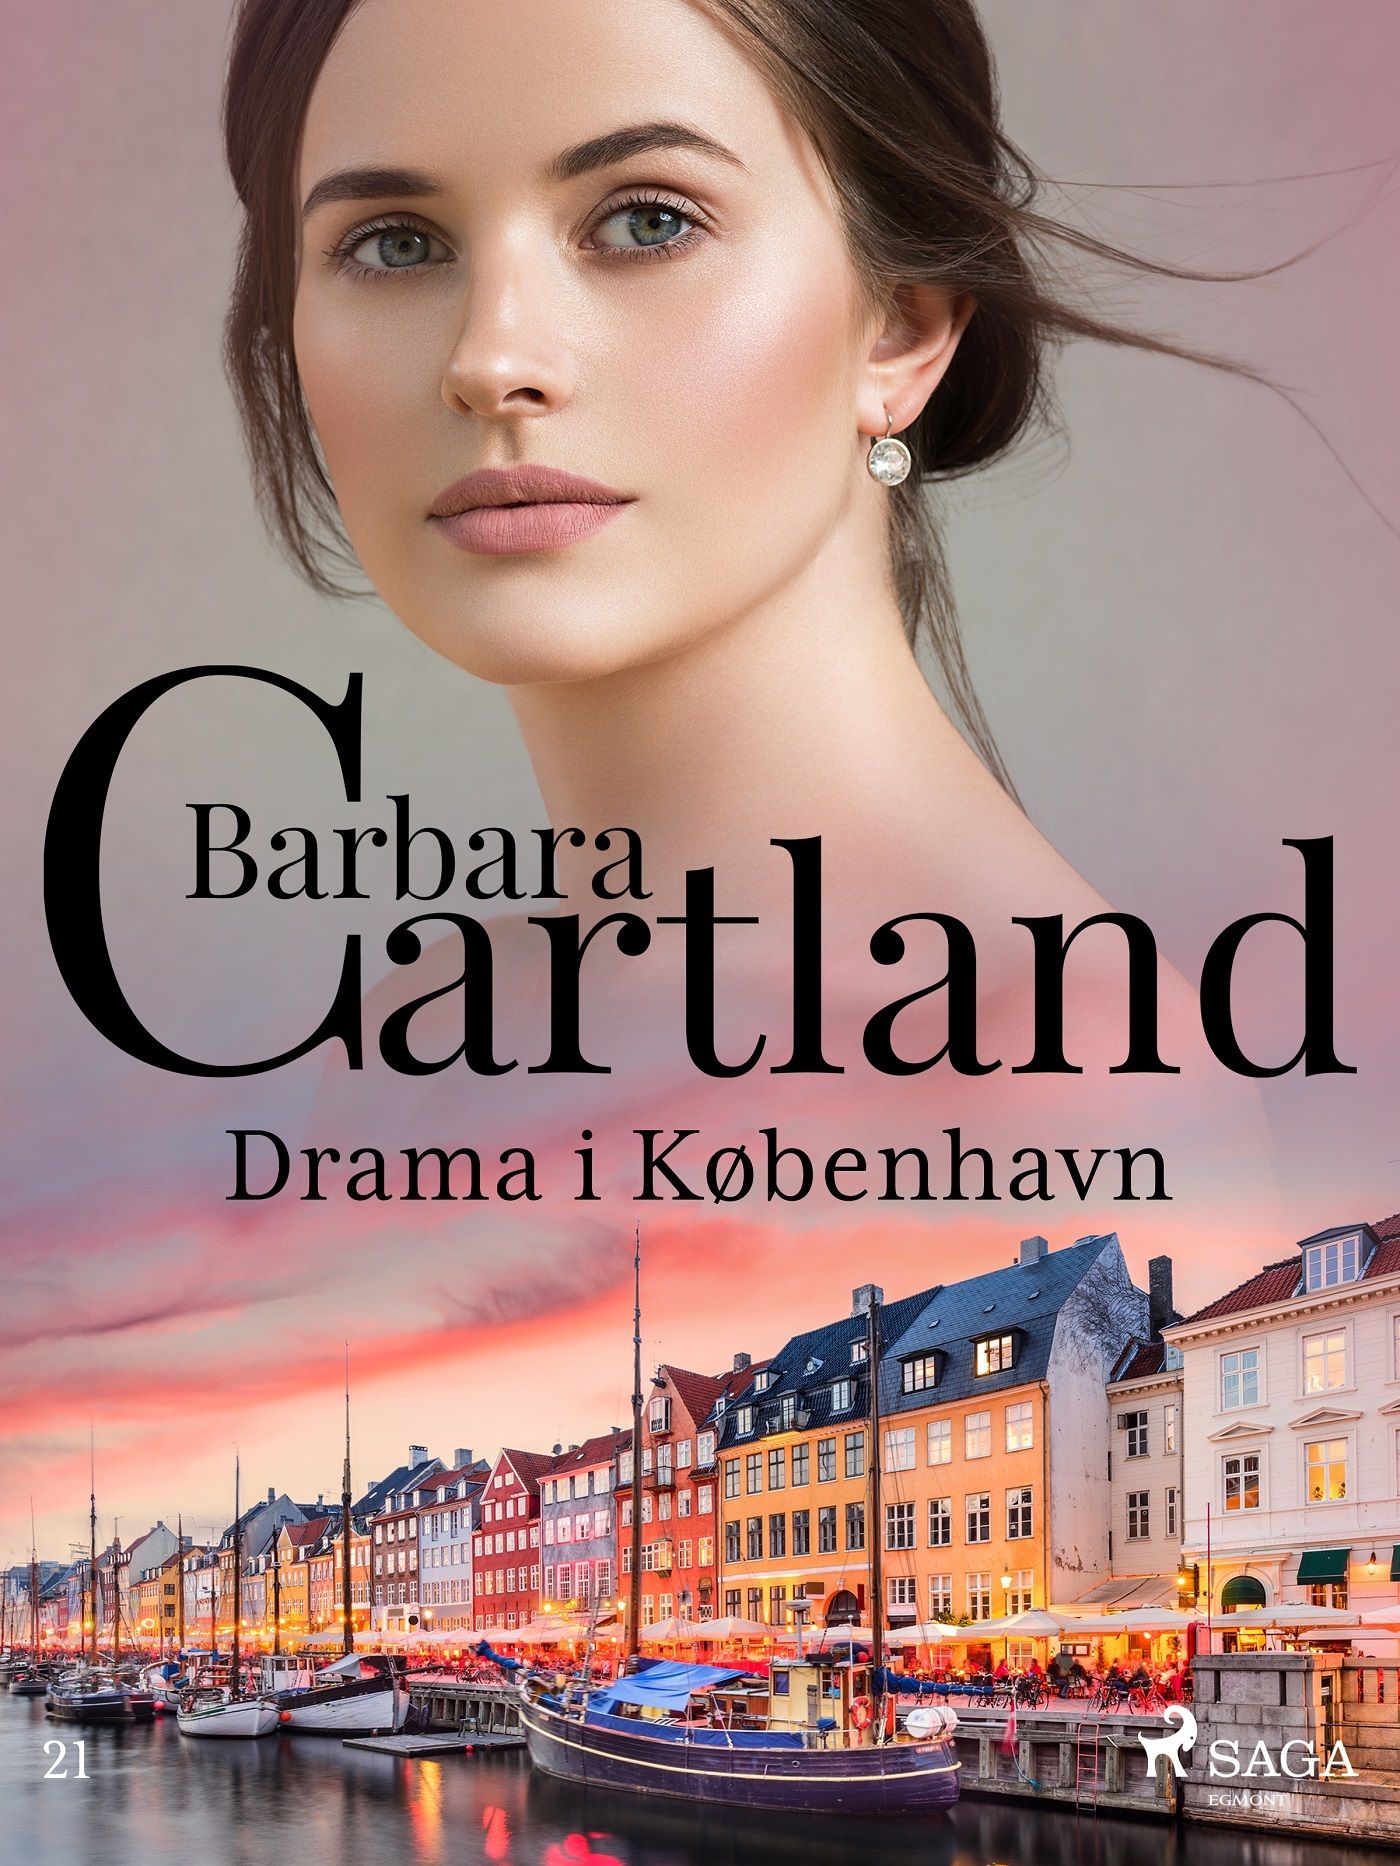 Drama i København, eBook by Barbara Cartland